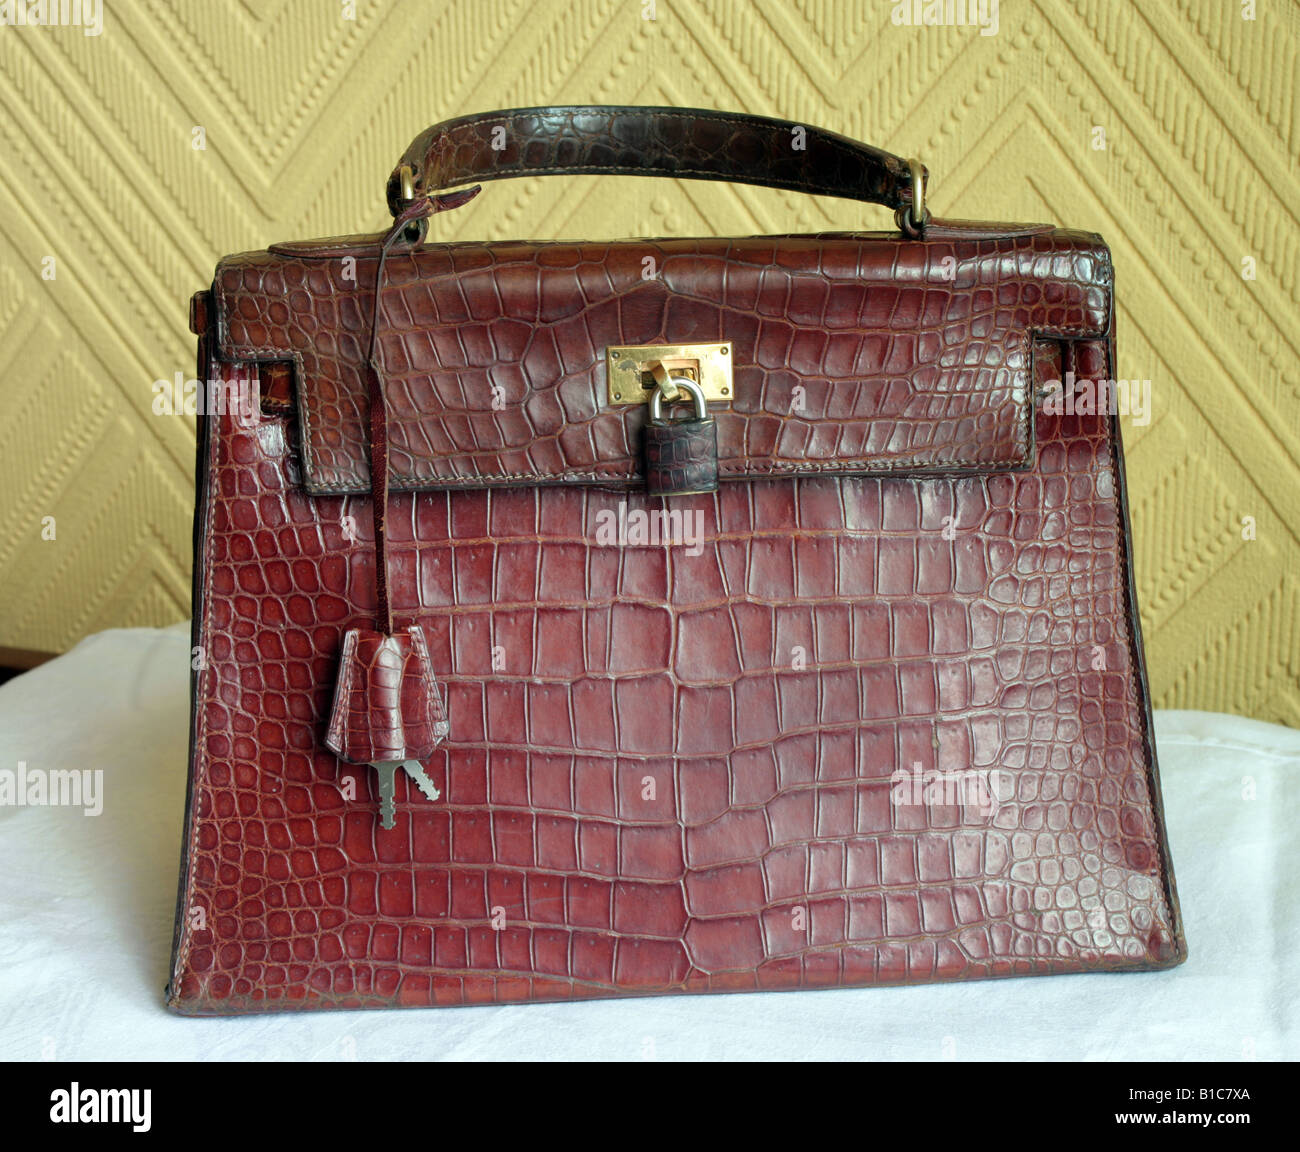 Kelly 35 crocodile handbag Hermès Brown in Crocodile - 11306275